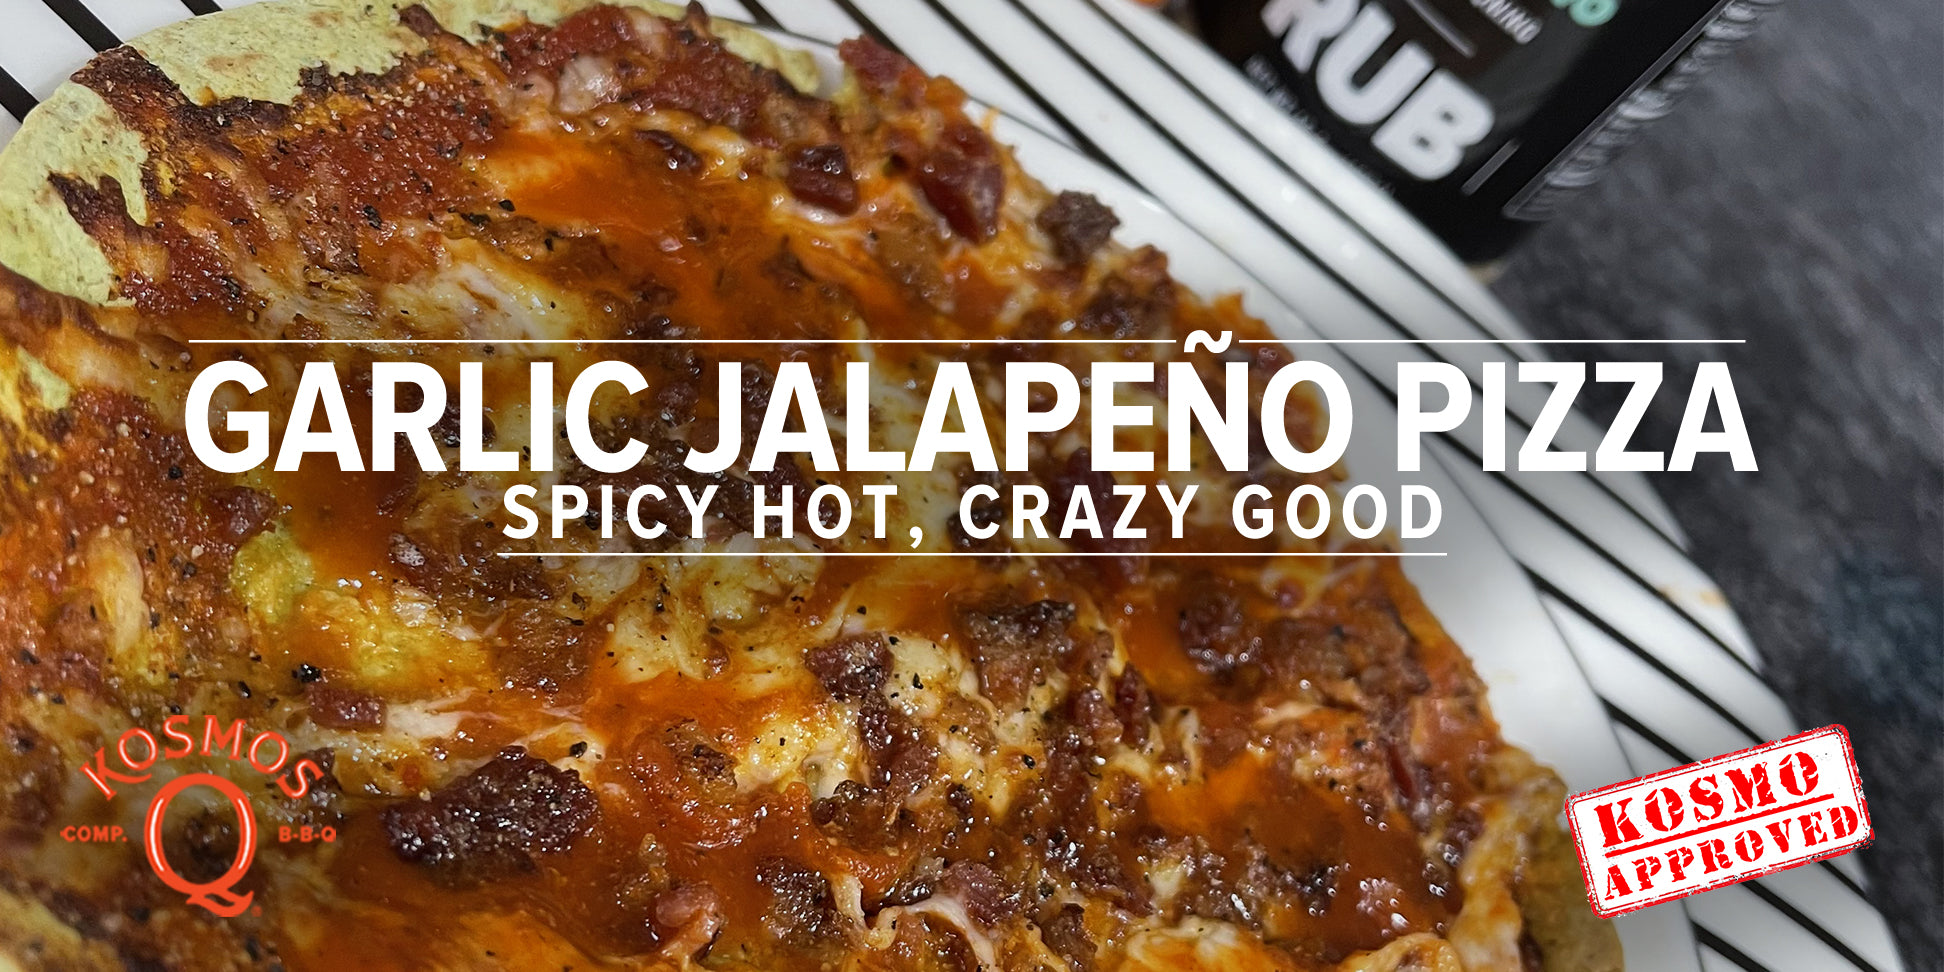 Garlic Jalapeno "Pizza" Recipe